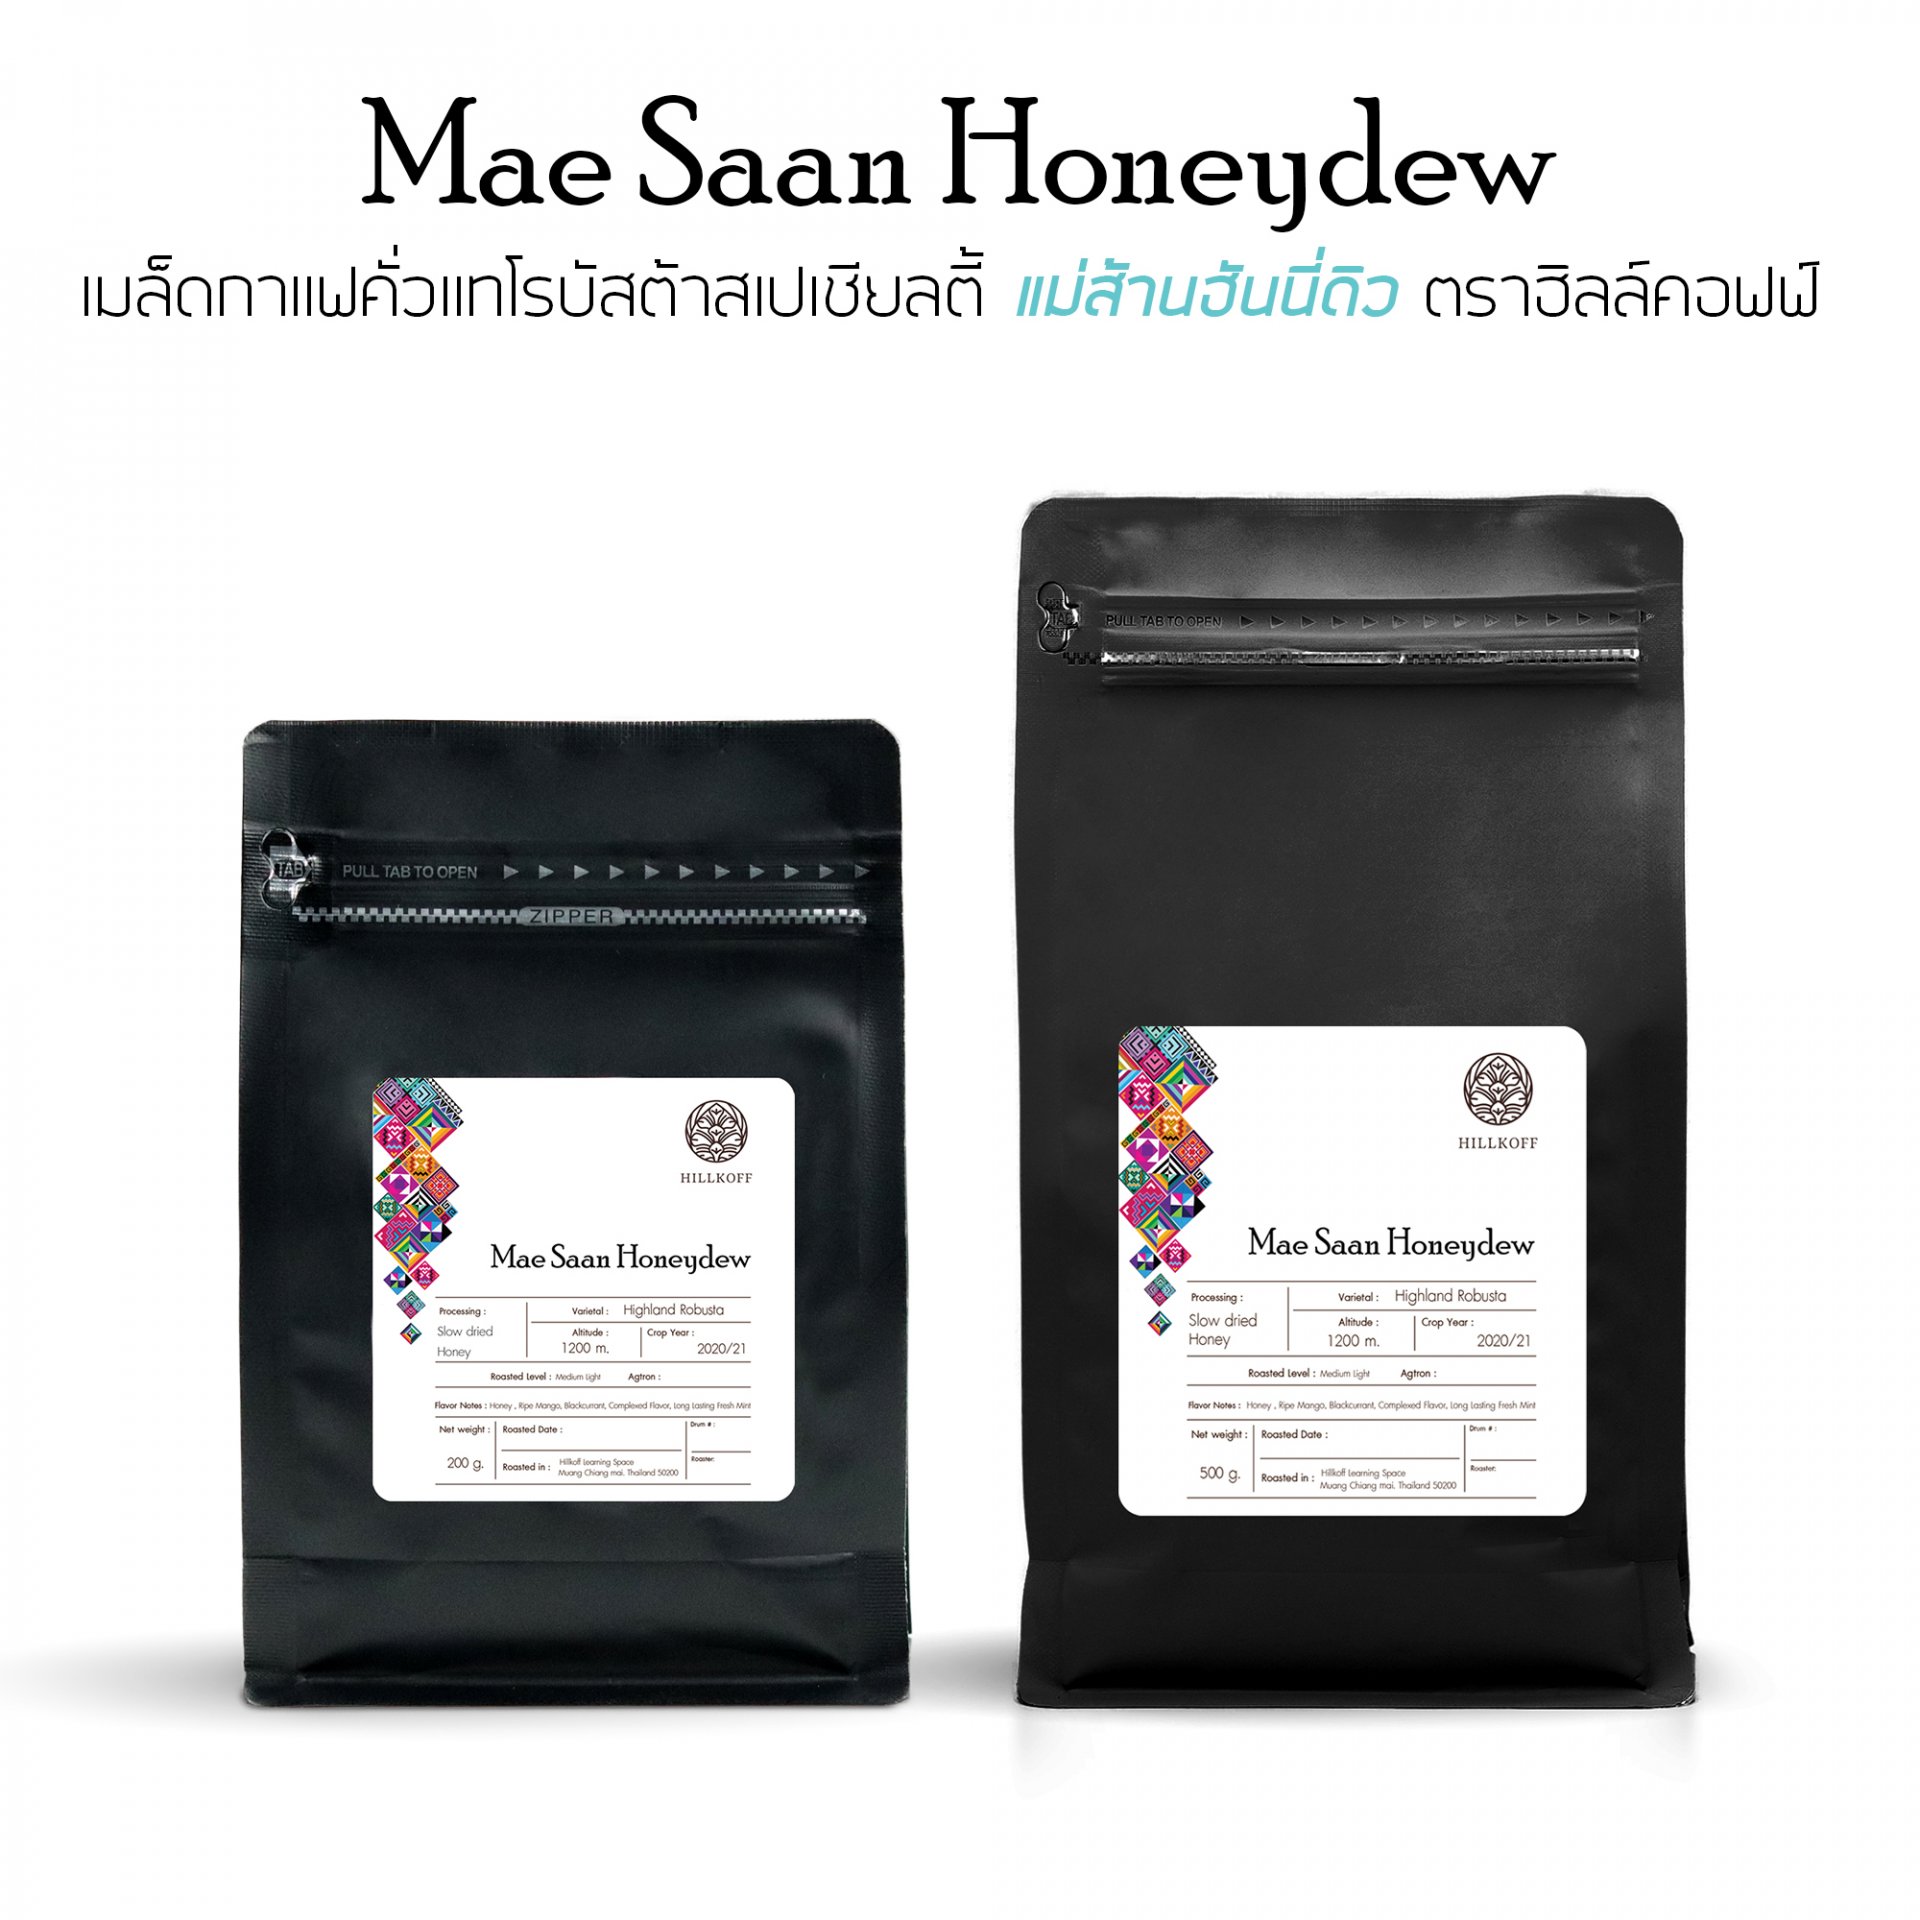 Mae Saan Honeydew : กาแฟ ดอยแม่ส้าน 500 กรัม